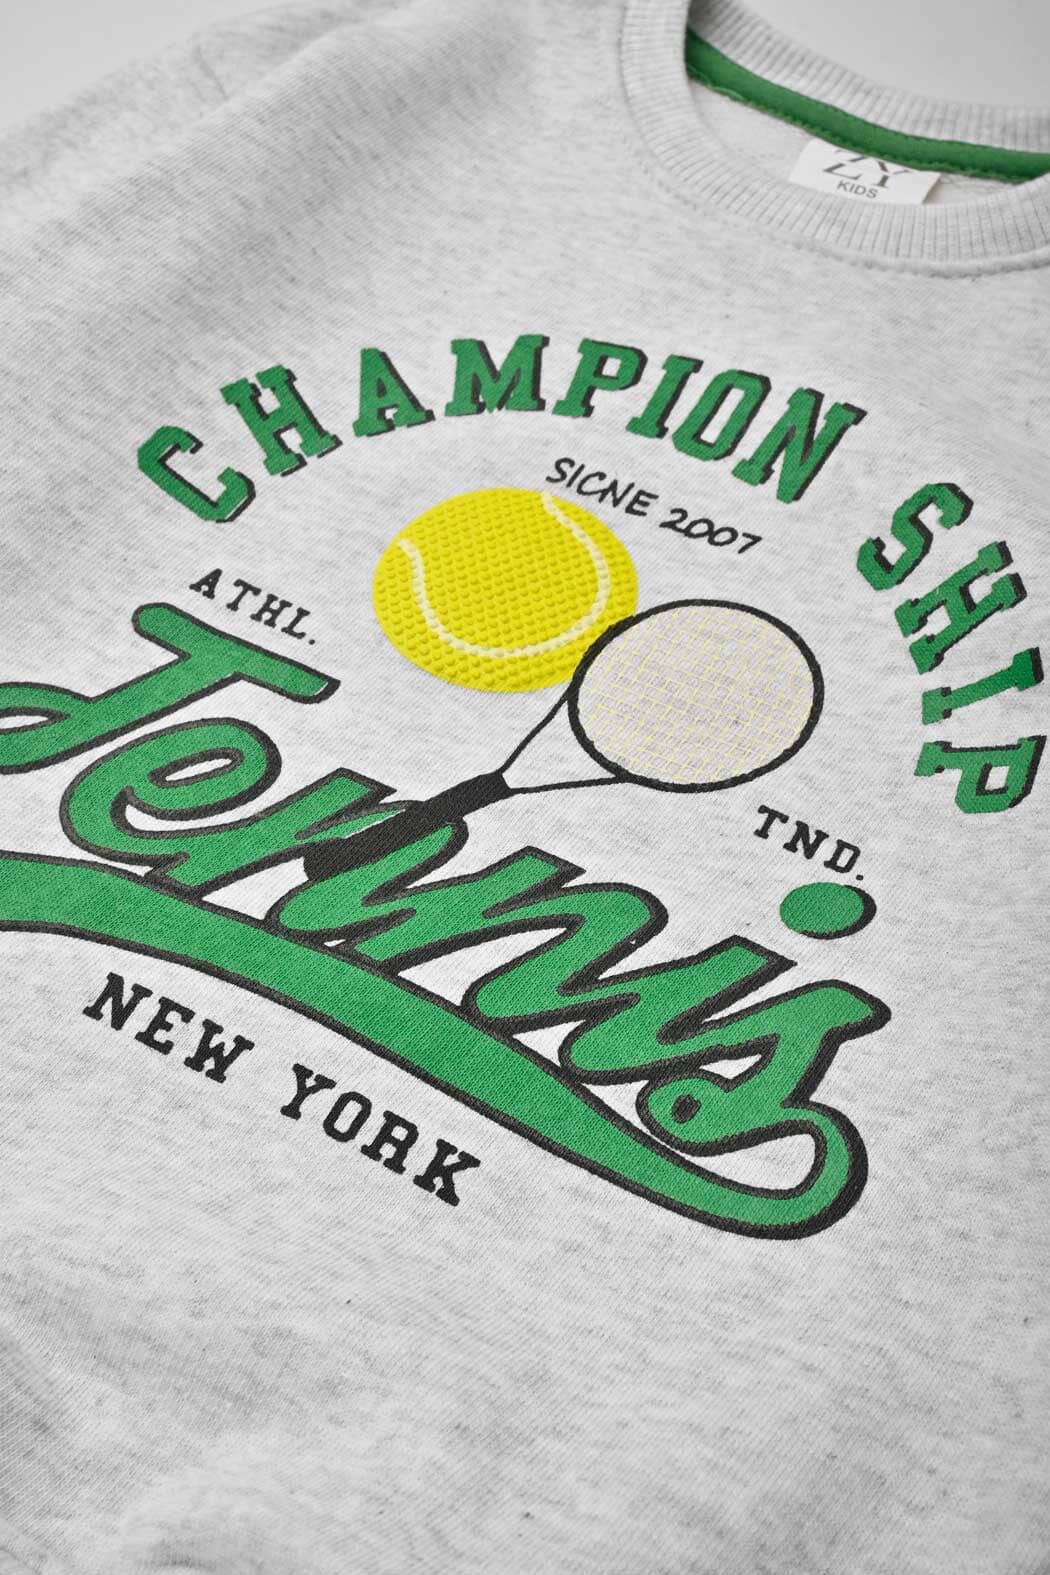 ZY Kid's Champion Ship Printed Minor Fault Terry Sweat Shirt Kid's Sweat Shirt SNR 